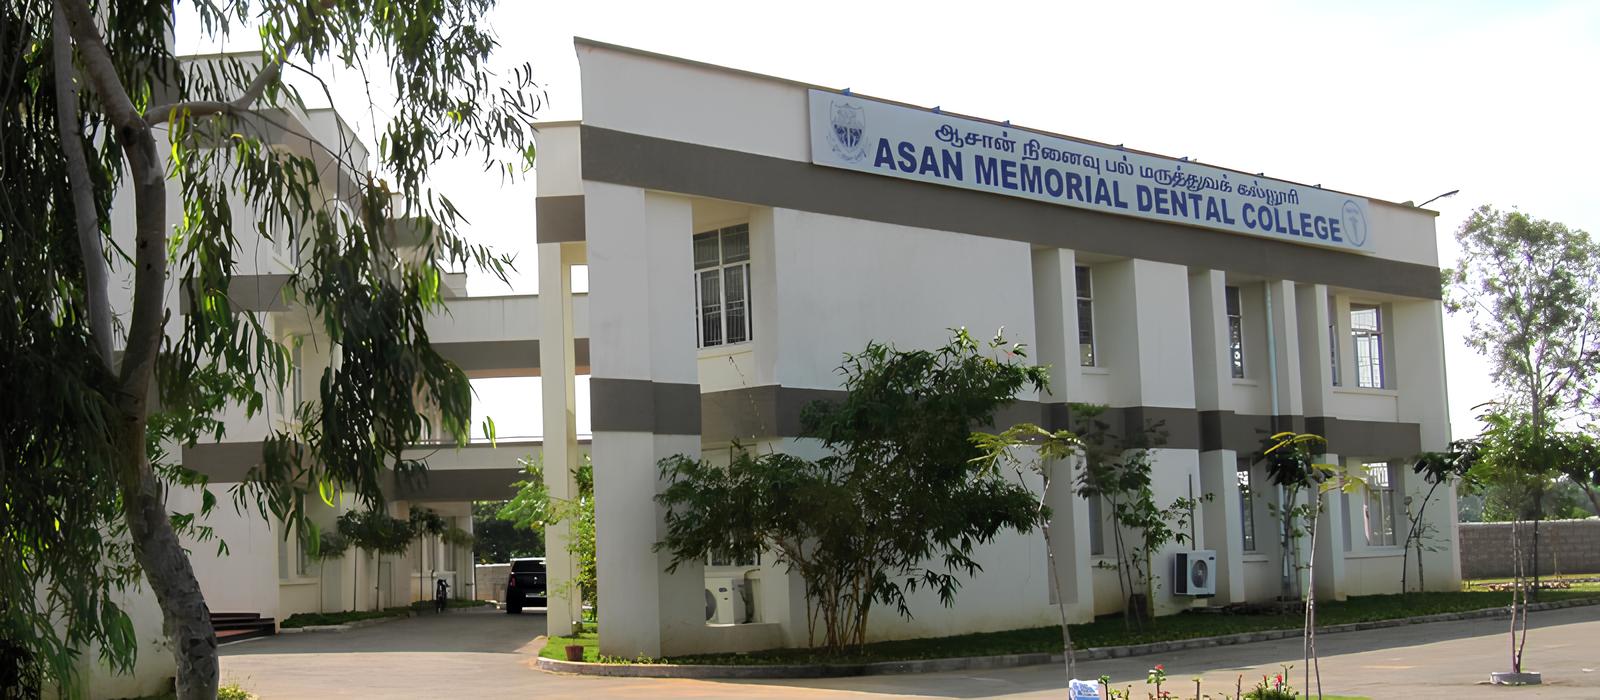 Asan Memorial Dental College Kanchipuram Admission, Courses, Fees, Facilities